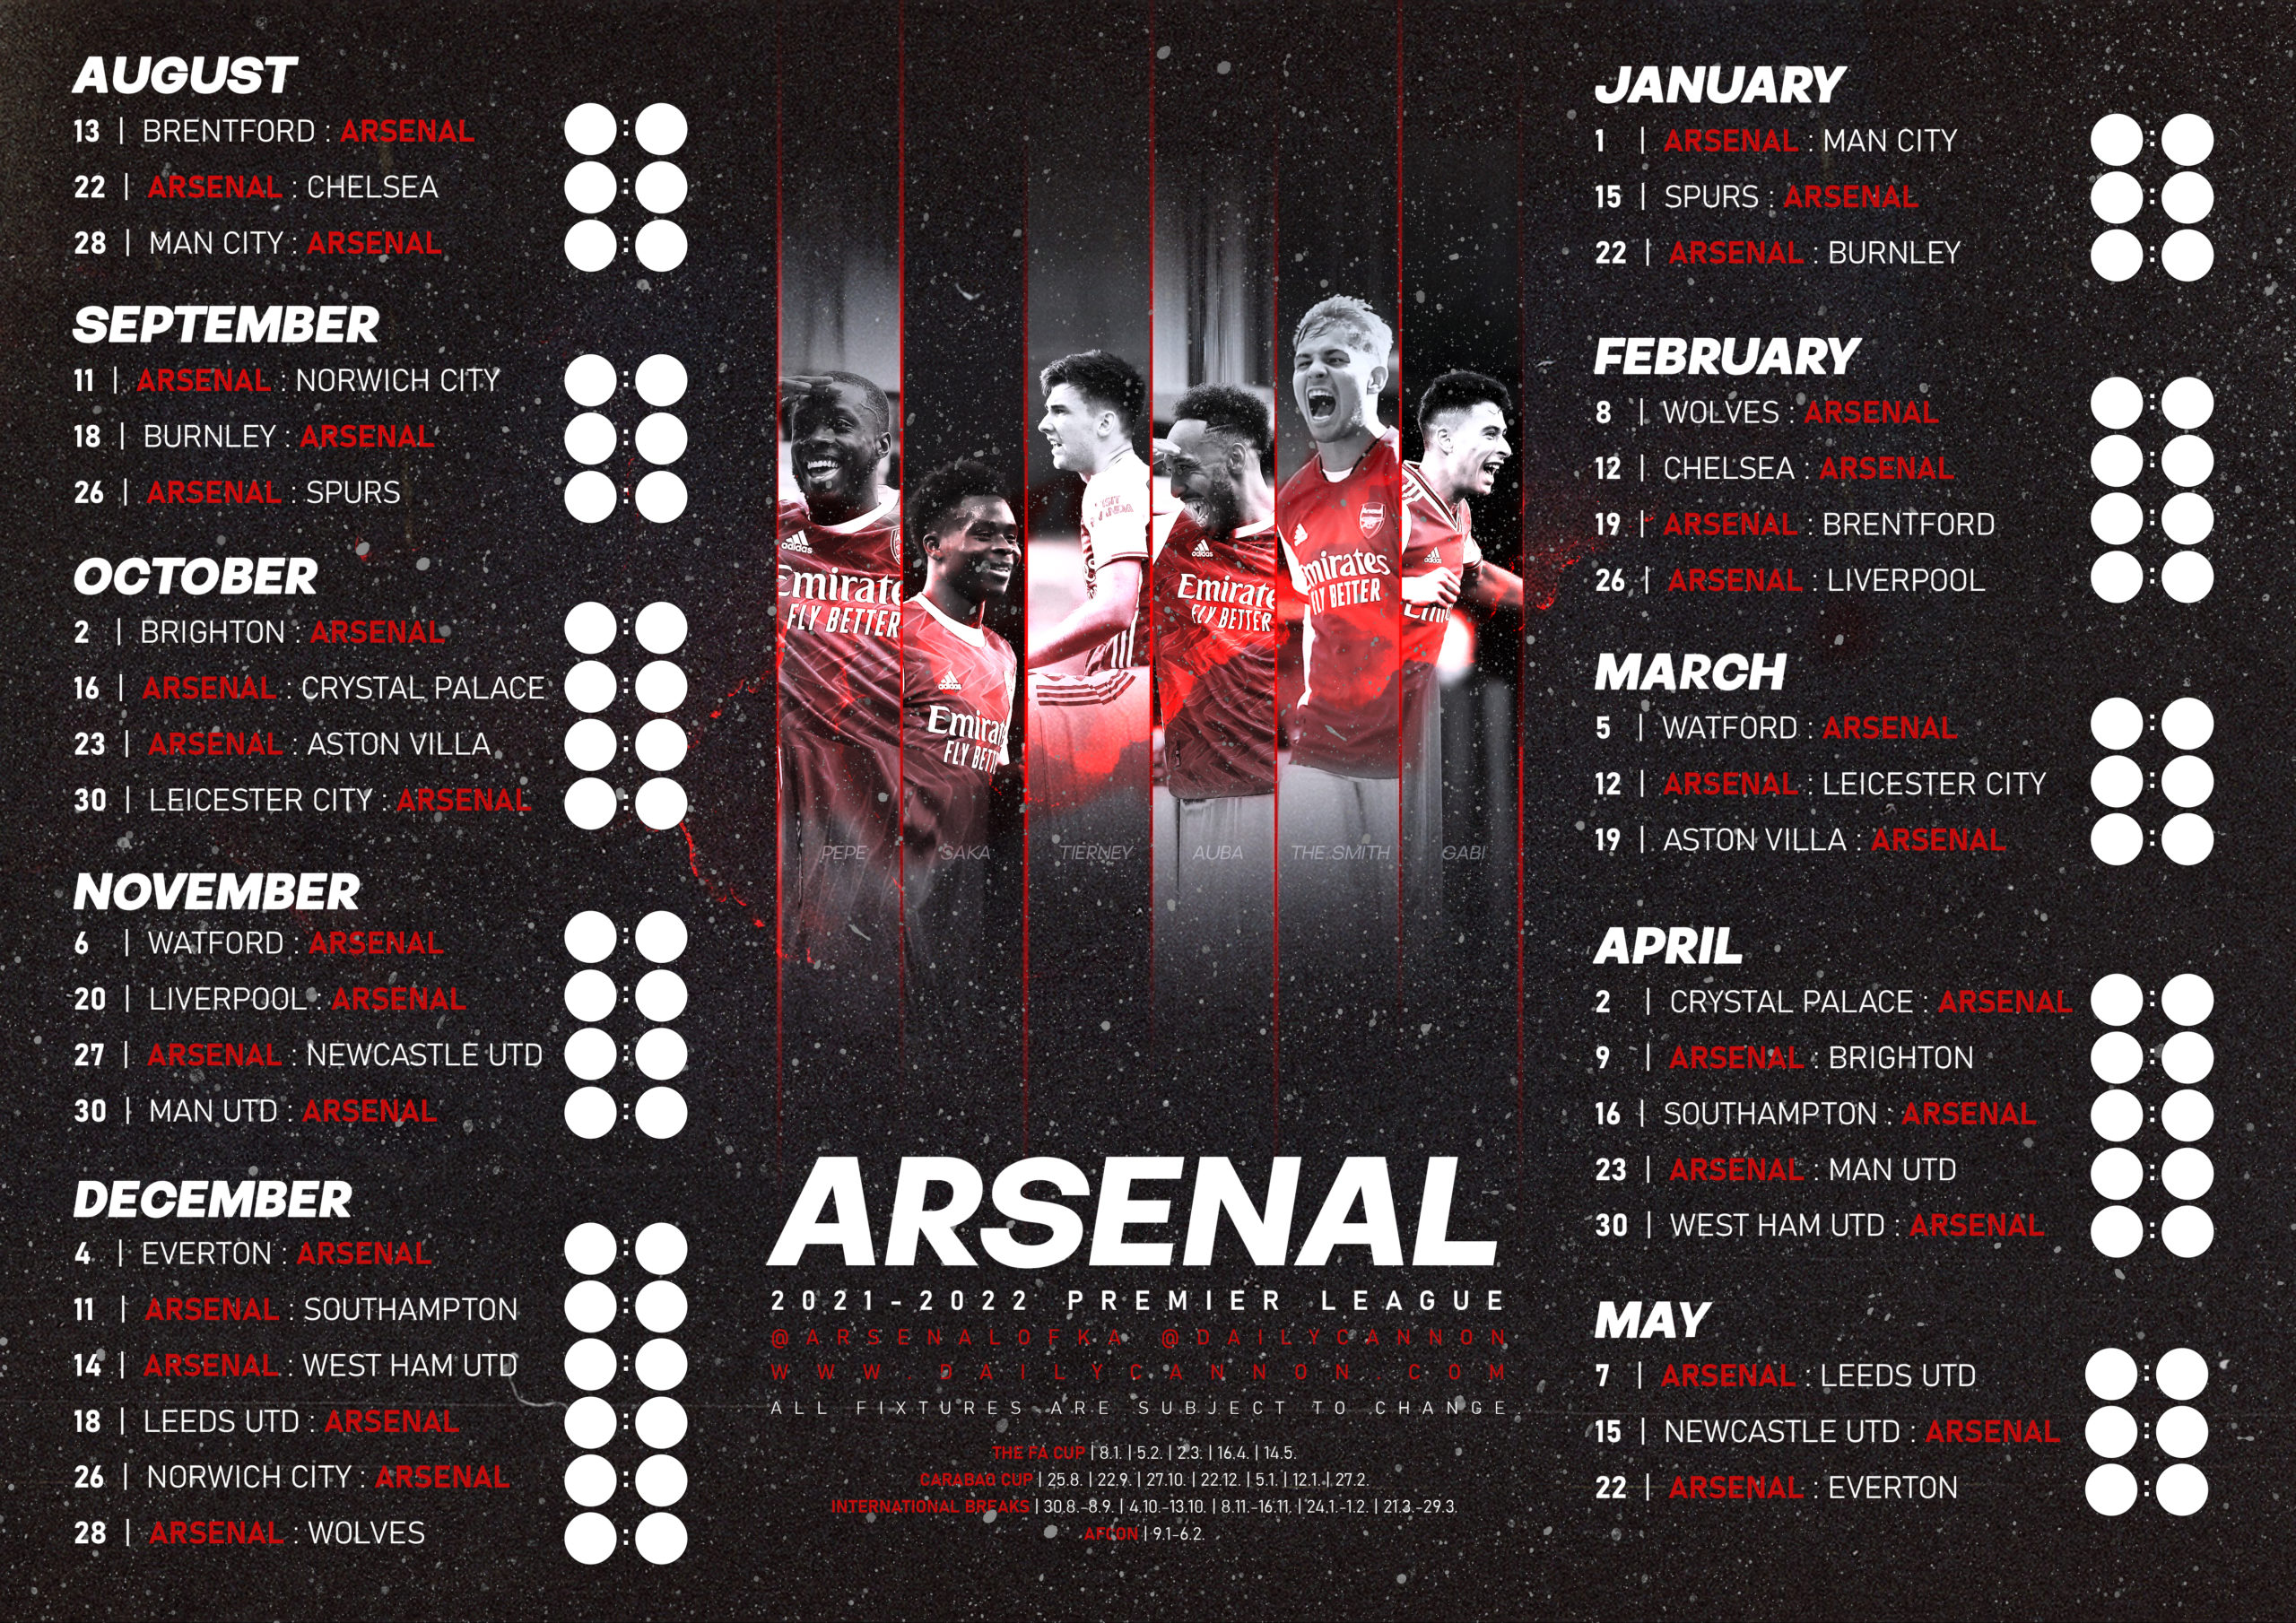 Download Arsenal fixtures wallchart for 23/24 season